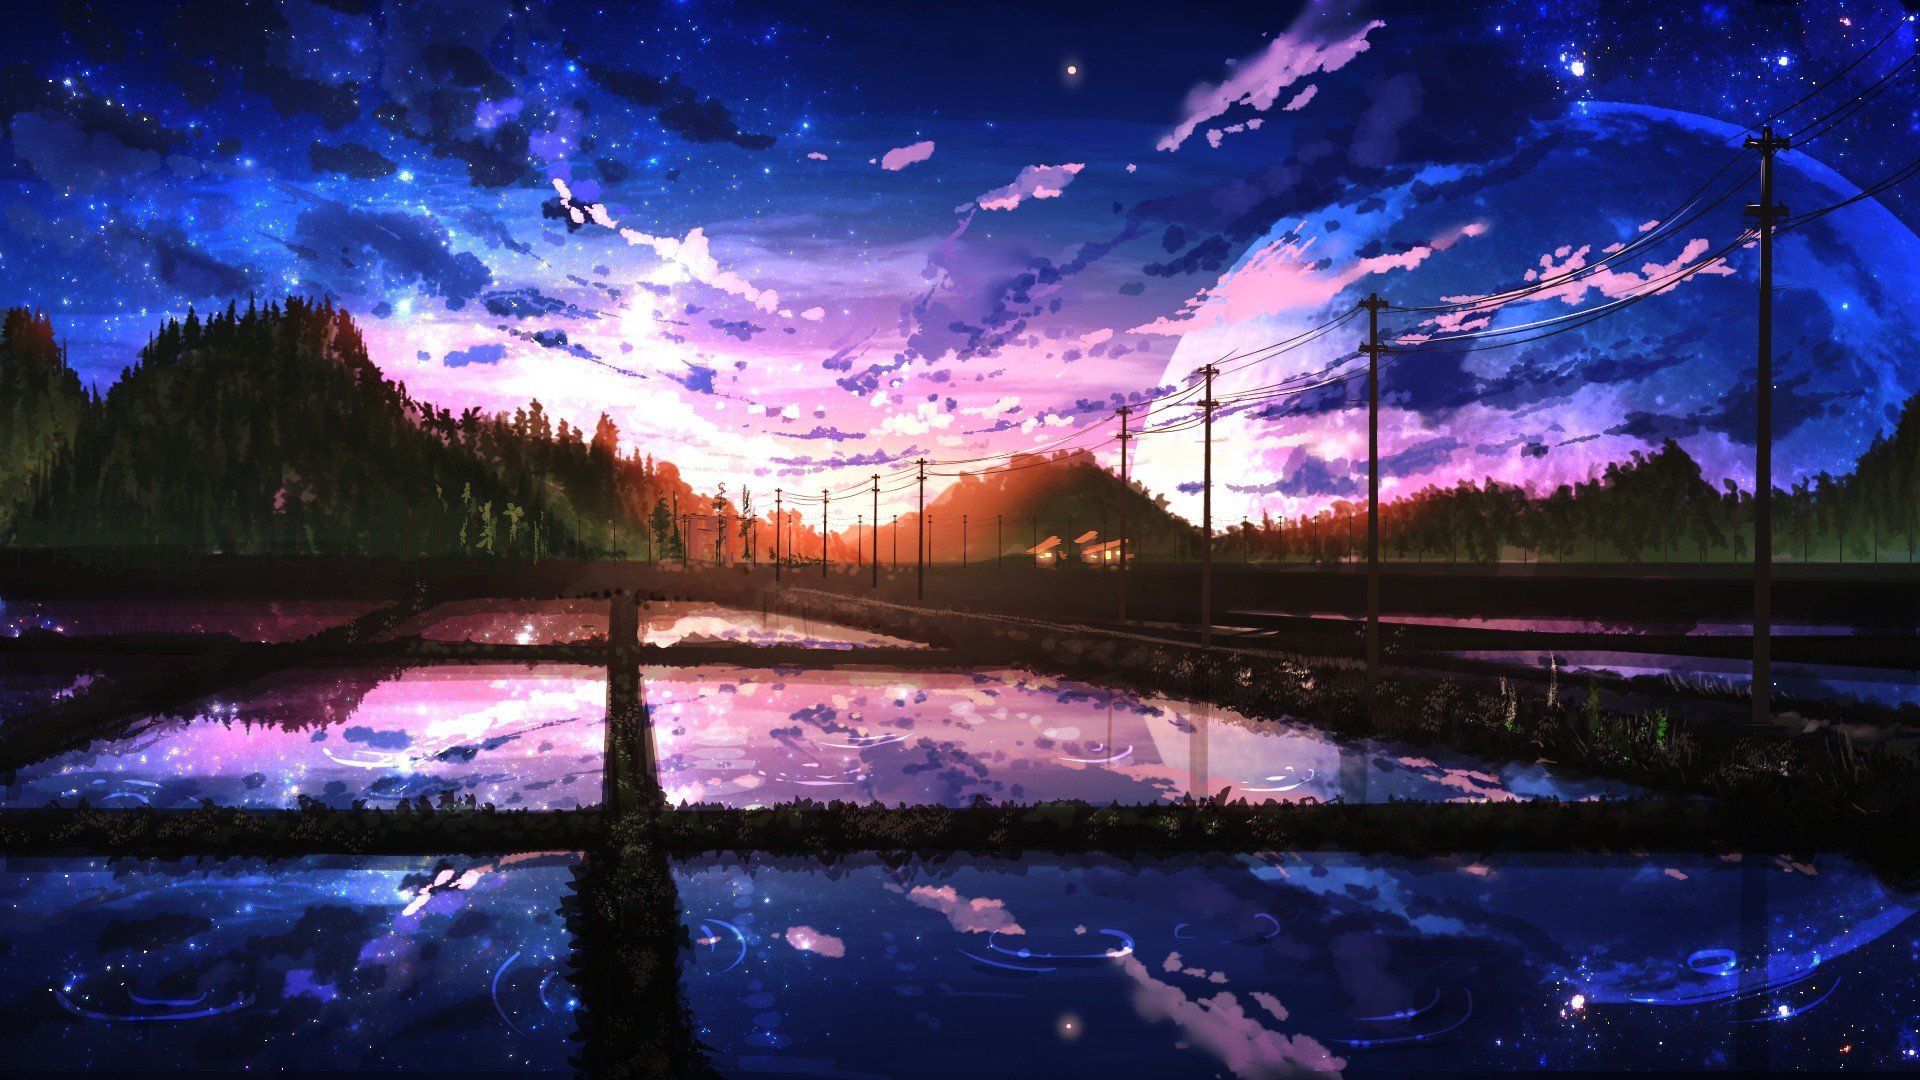 Night Anime Wallpaper Landscape